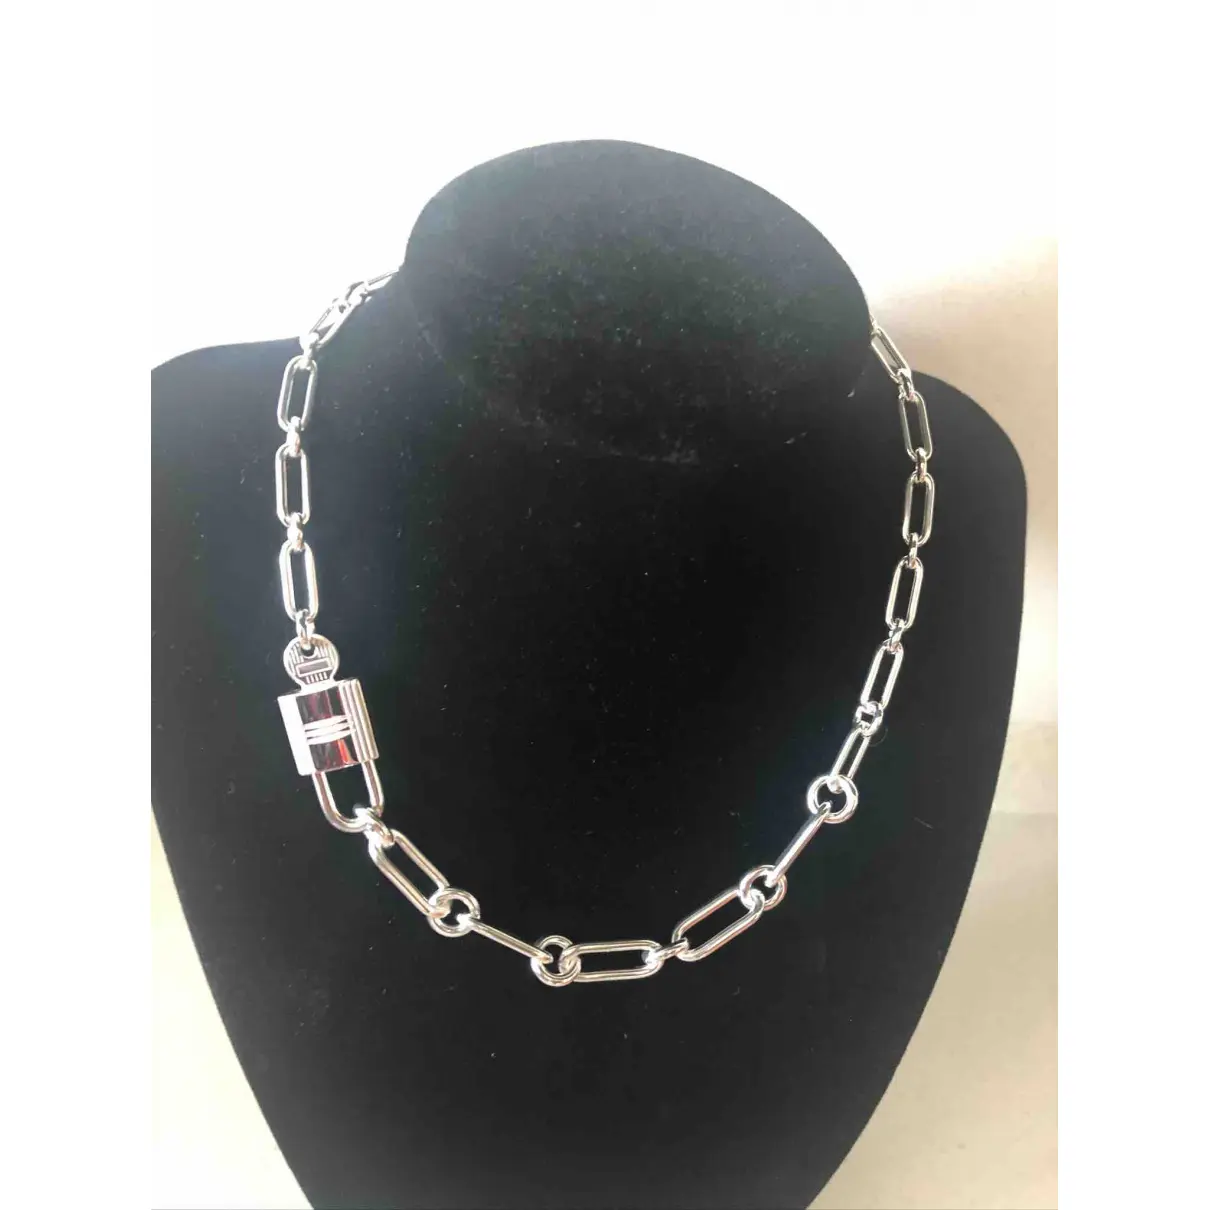 Buy Hermès Kelly silver necklace online